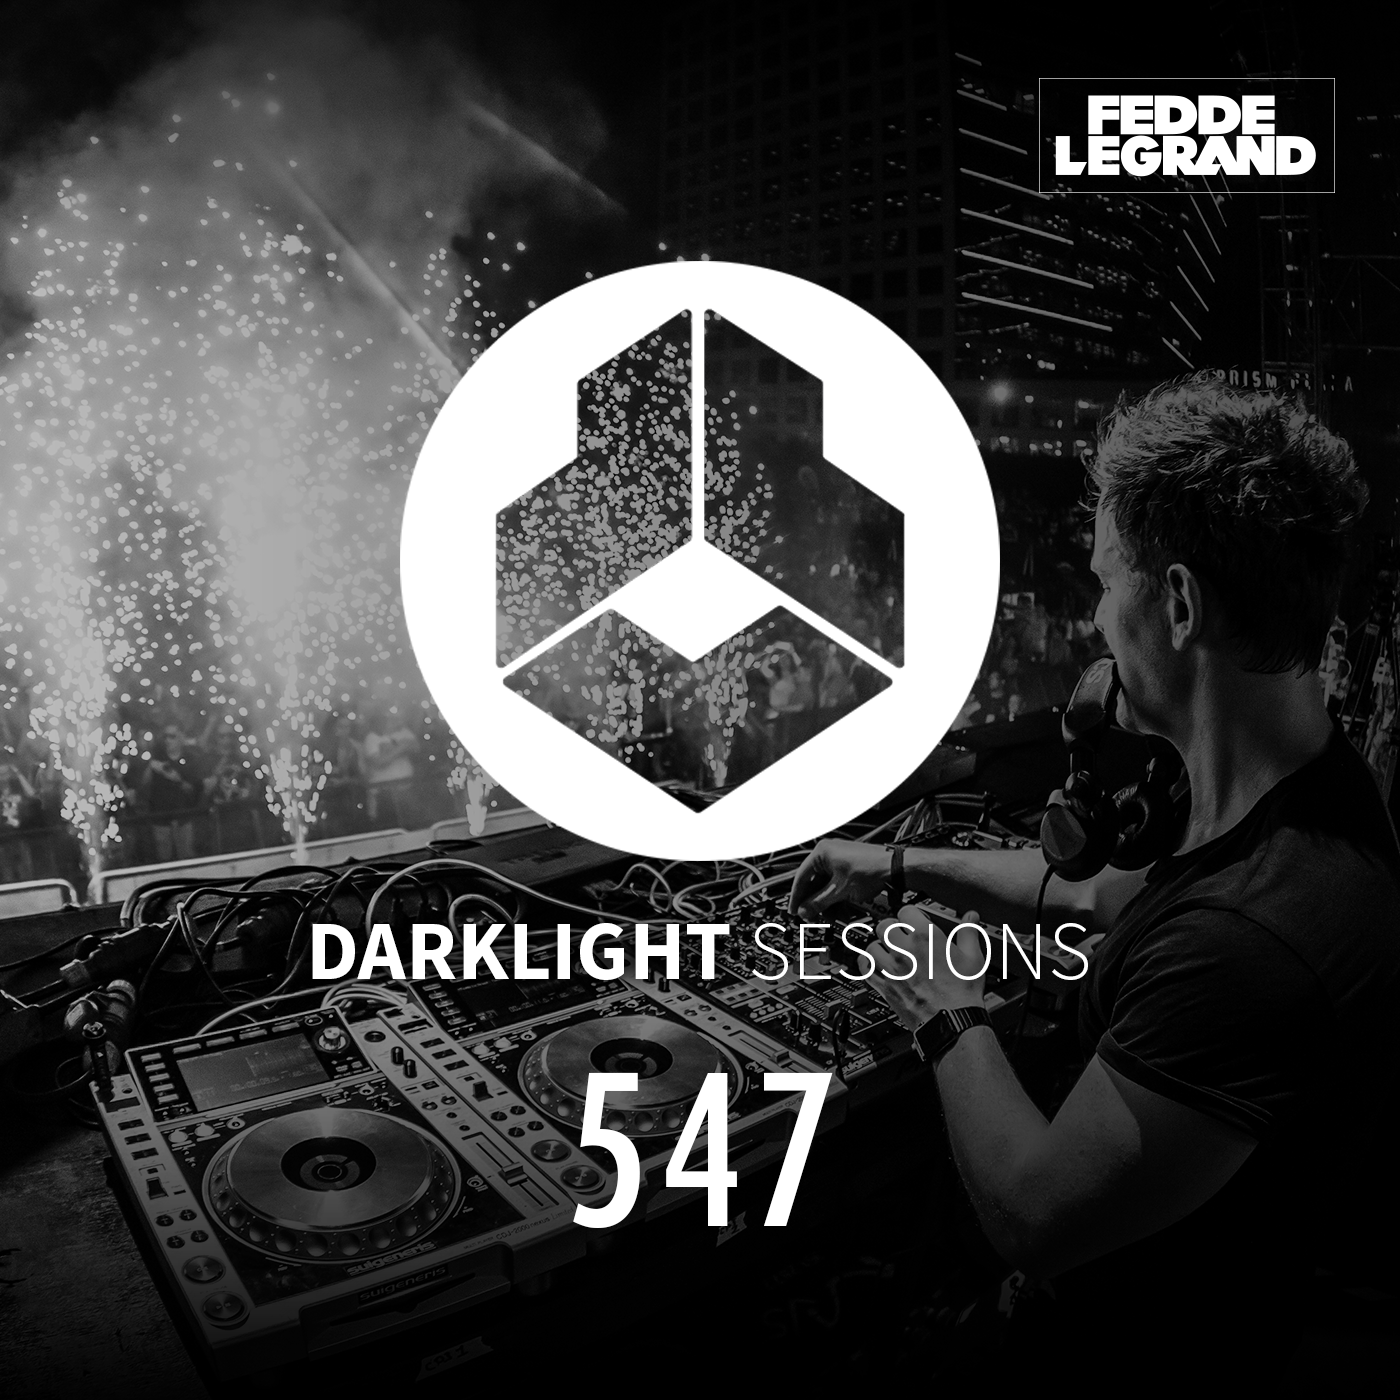 Darklight Sessions 547